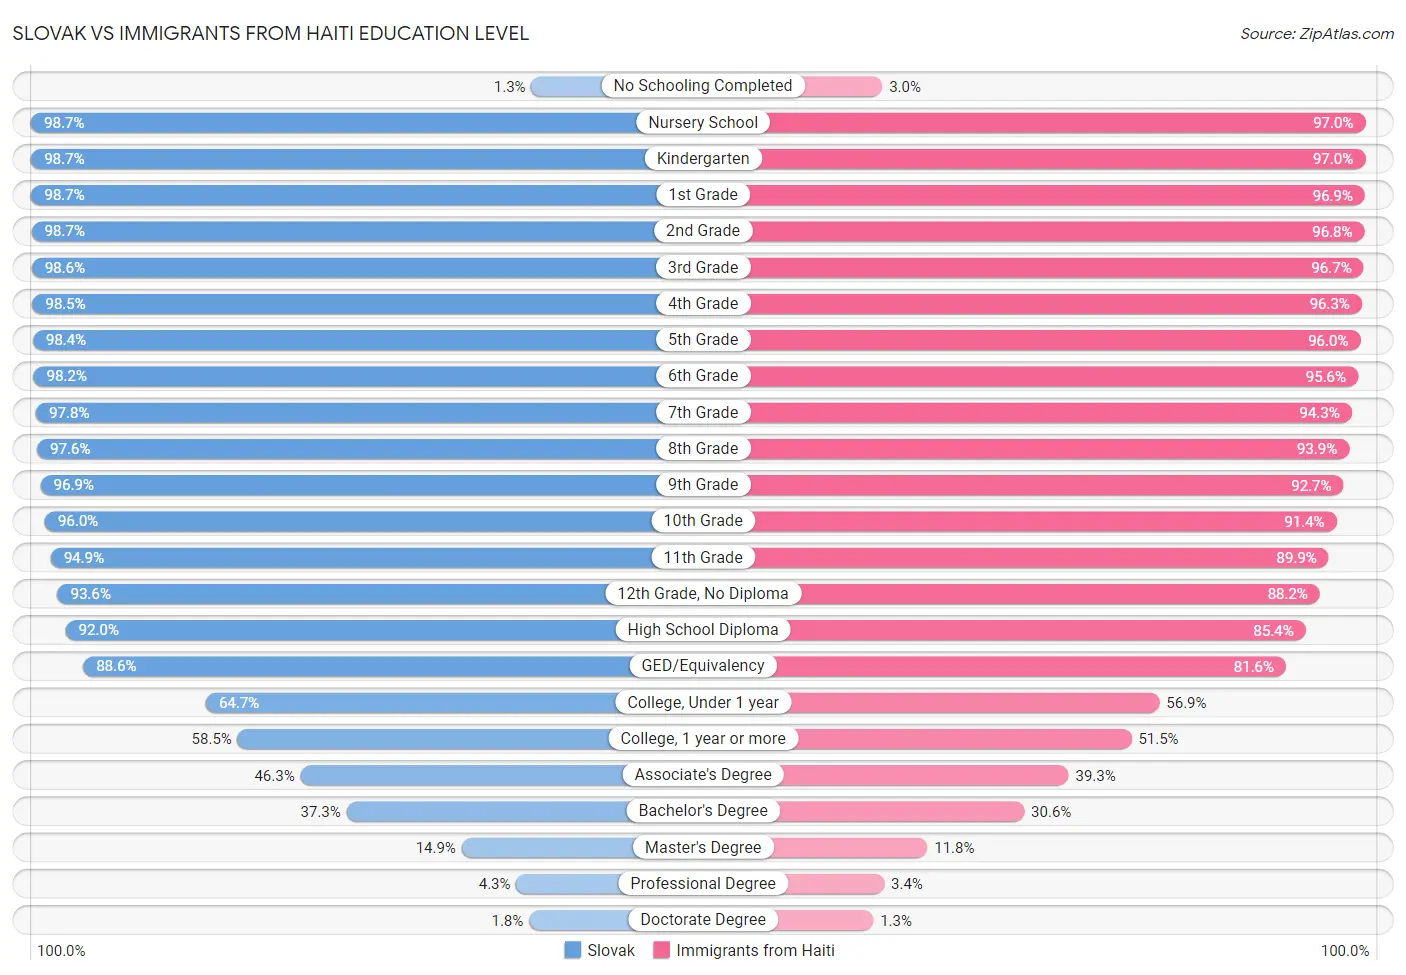 Slovak vs Immigrants from Haiti Education Level